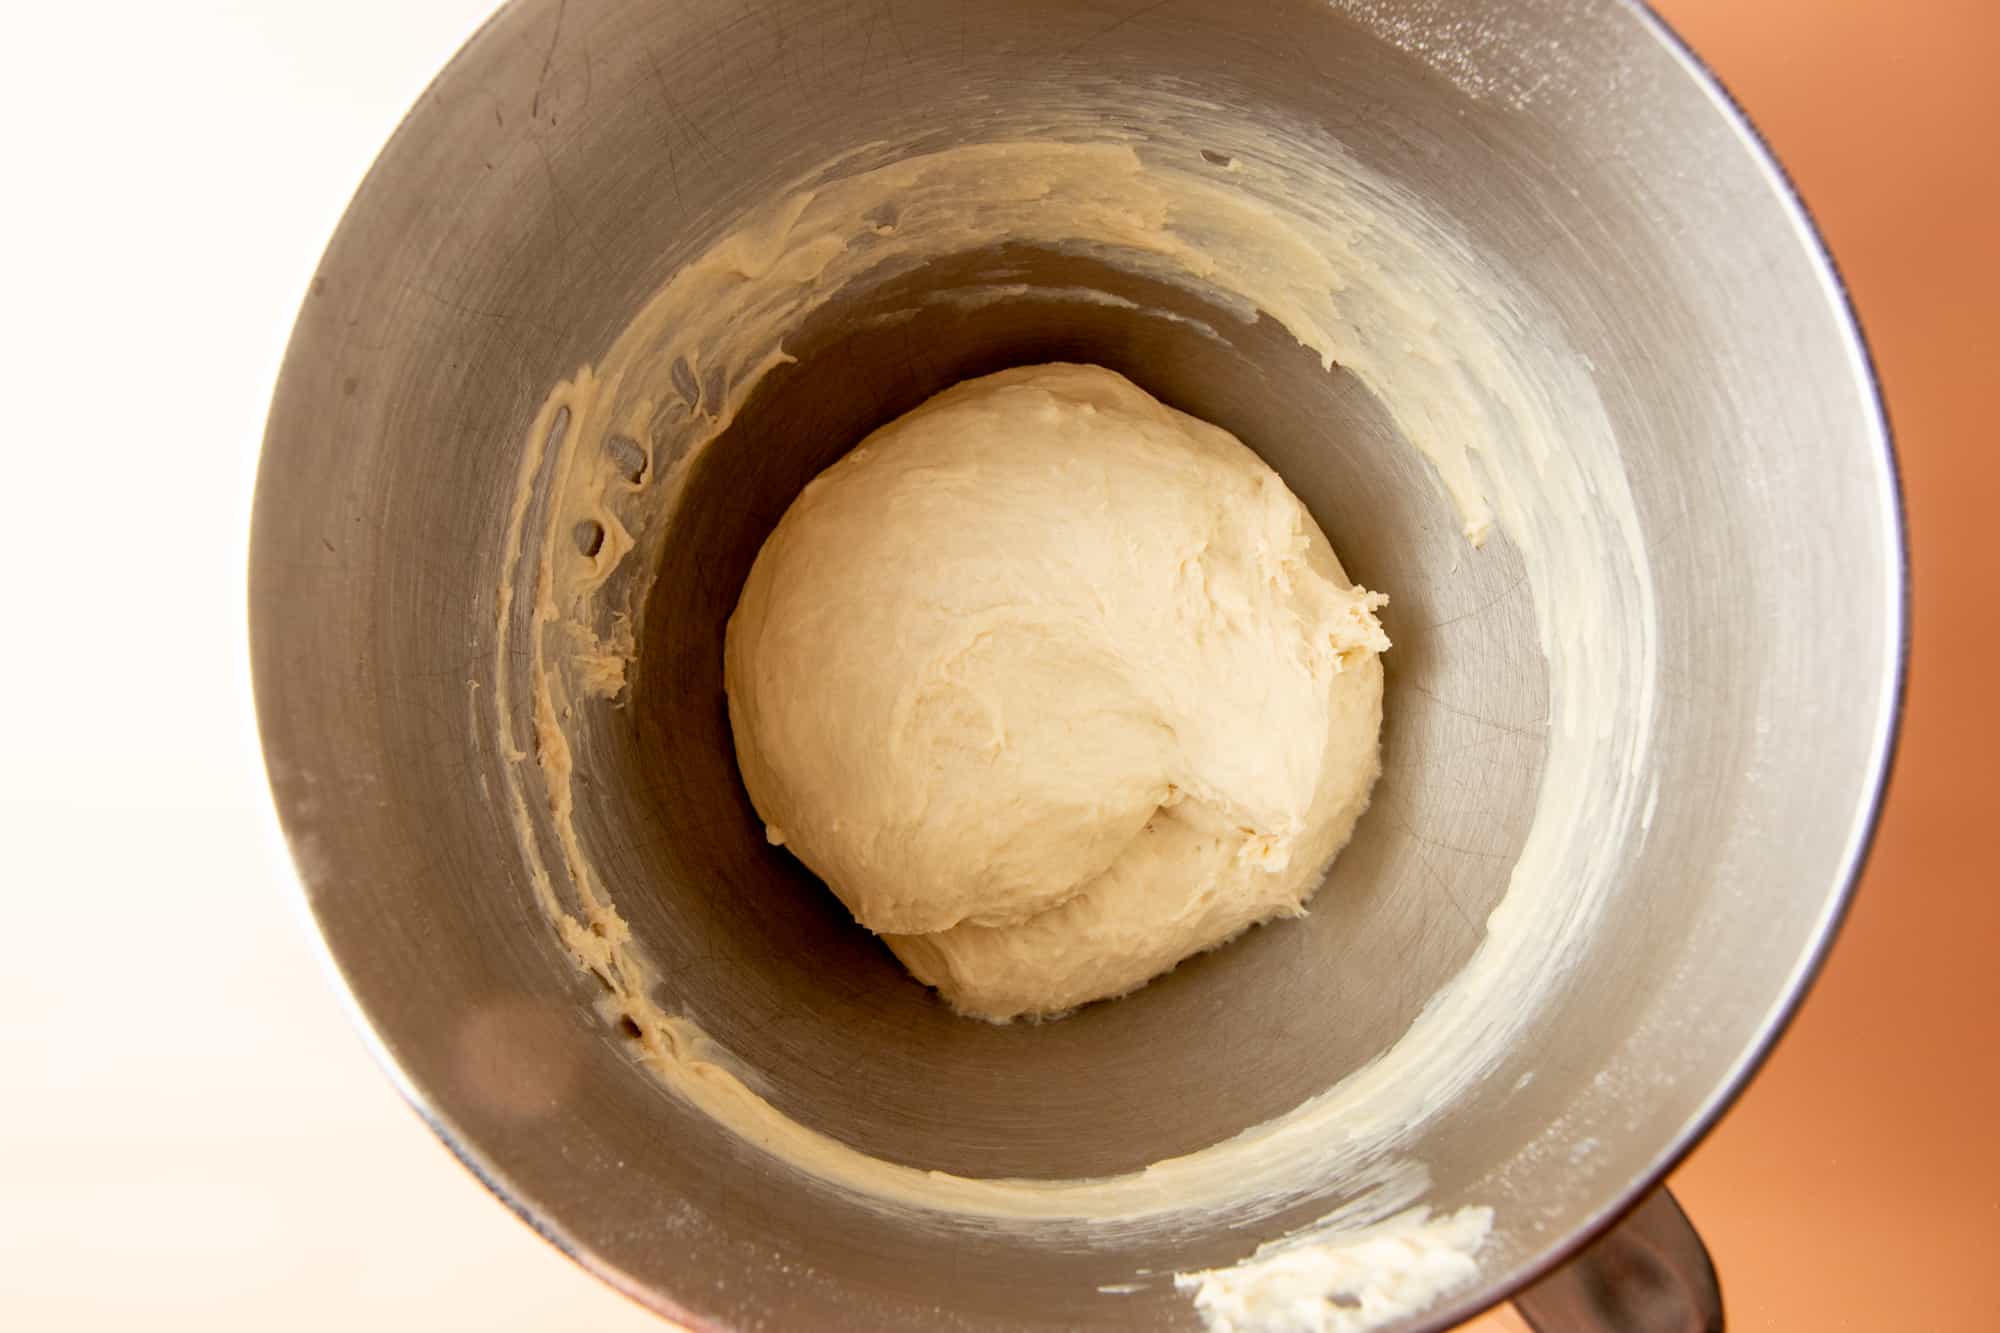 A ball of dough sits inside the mixer.